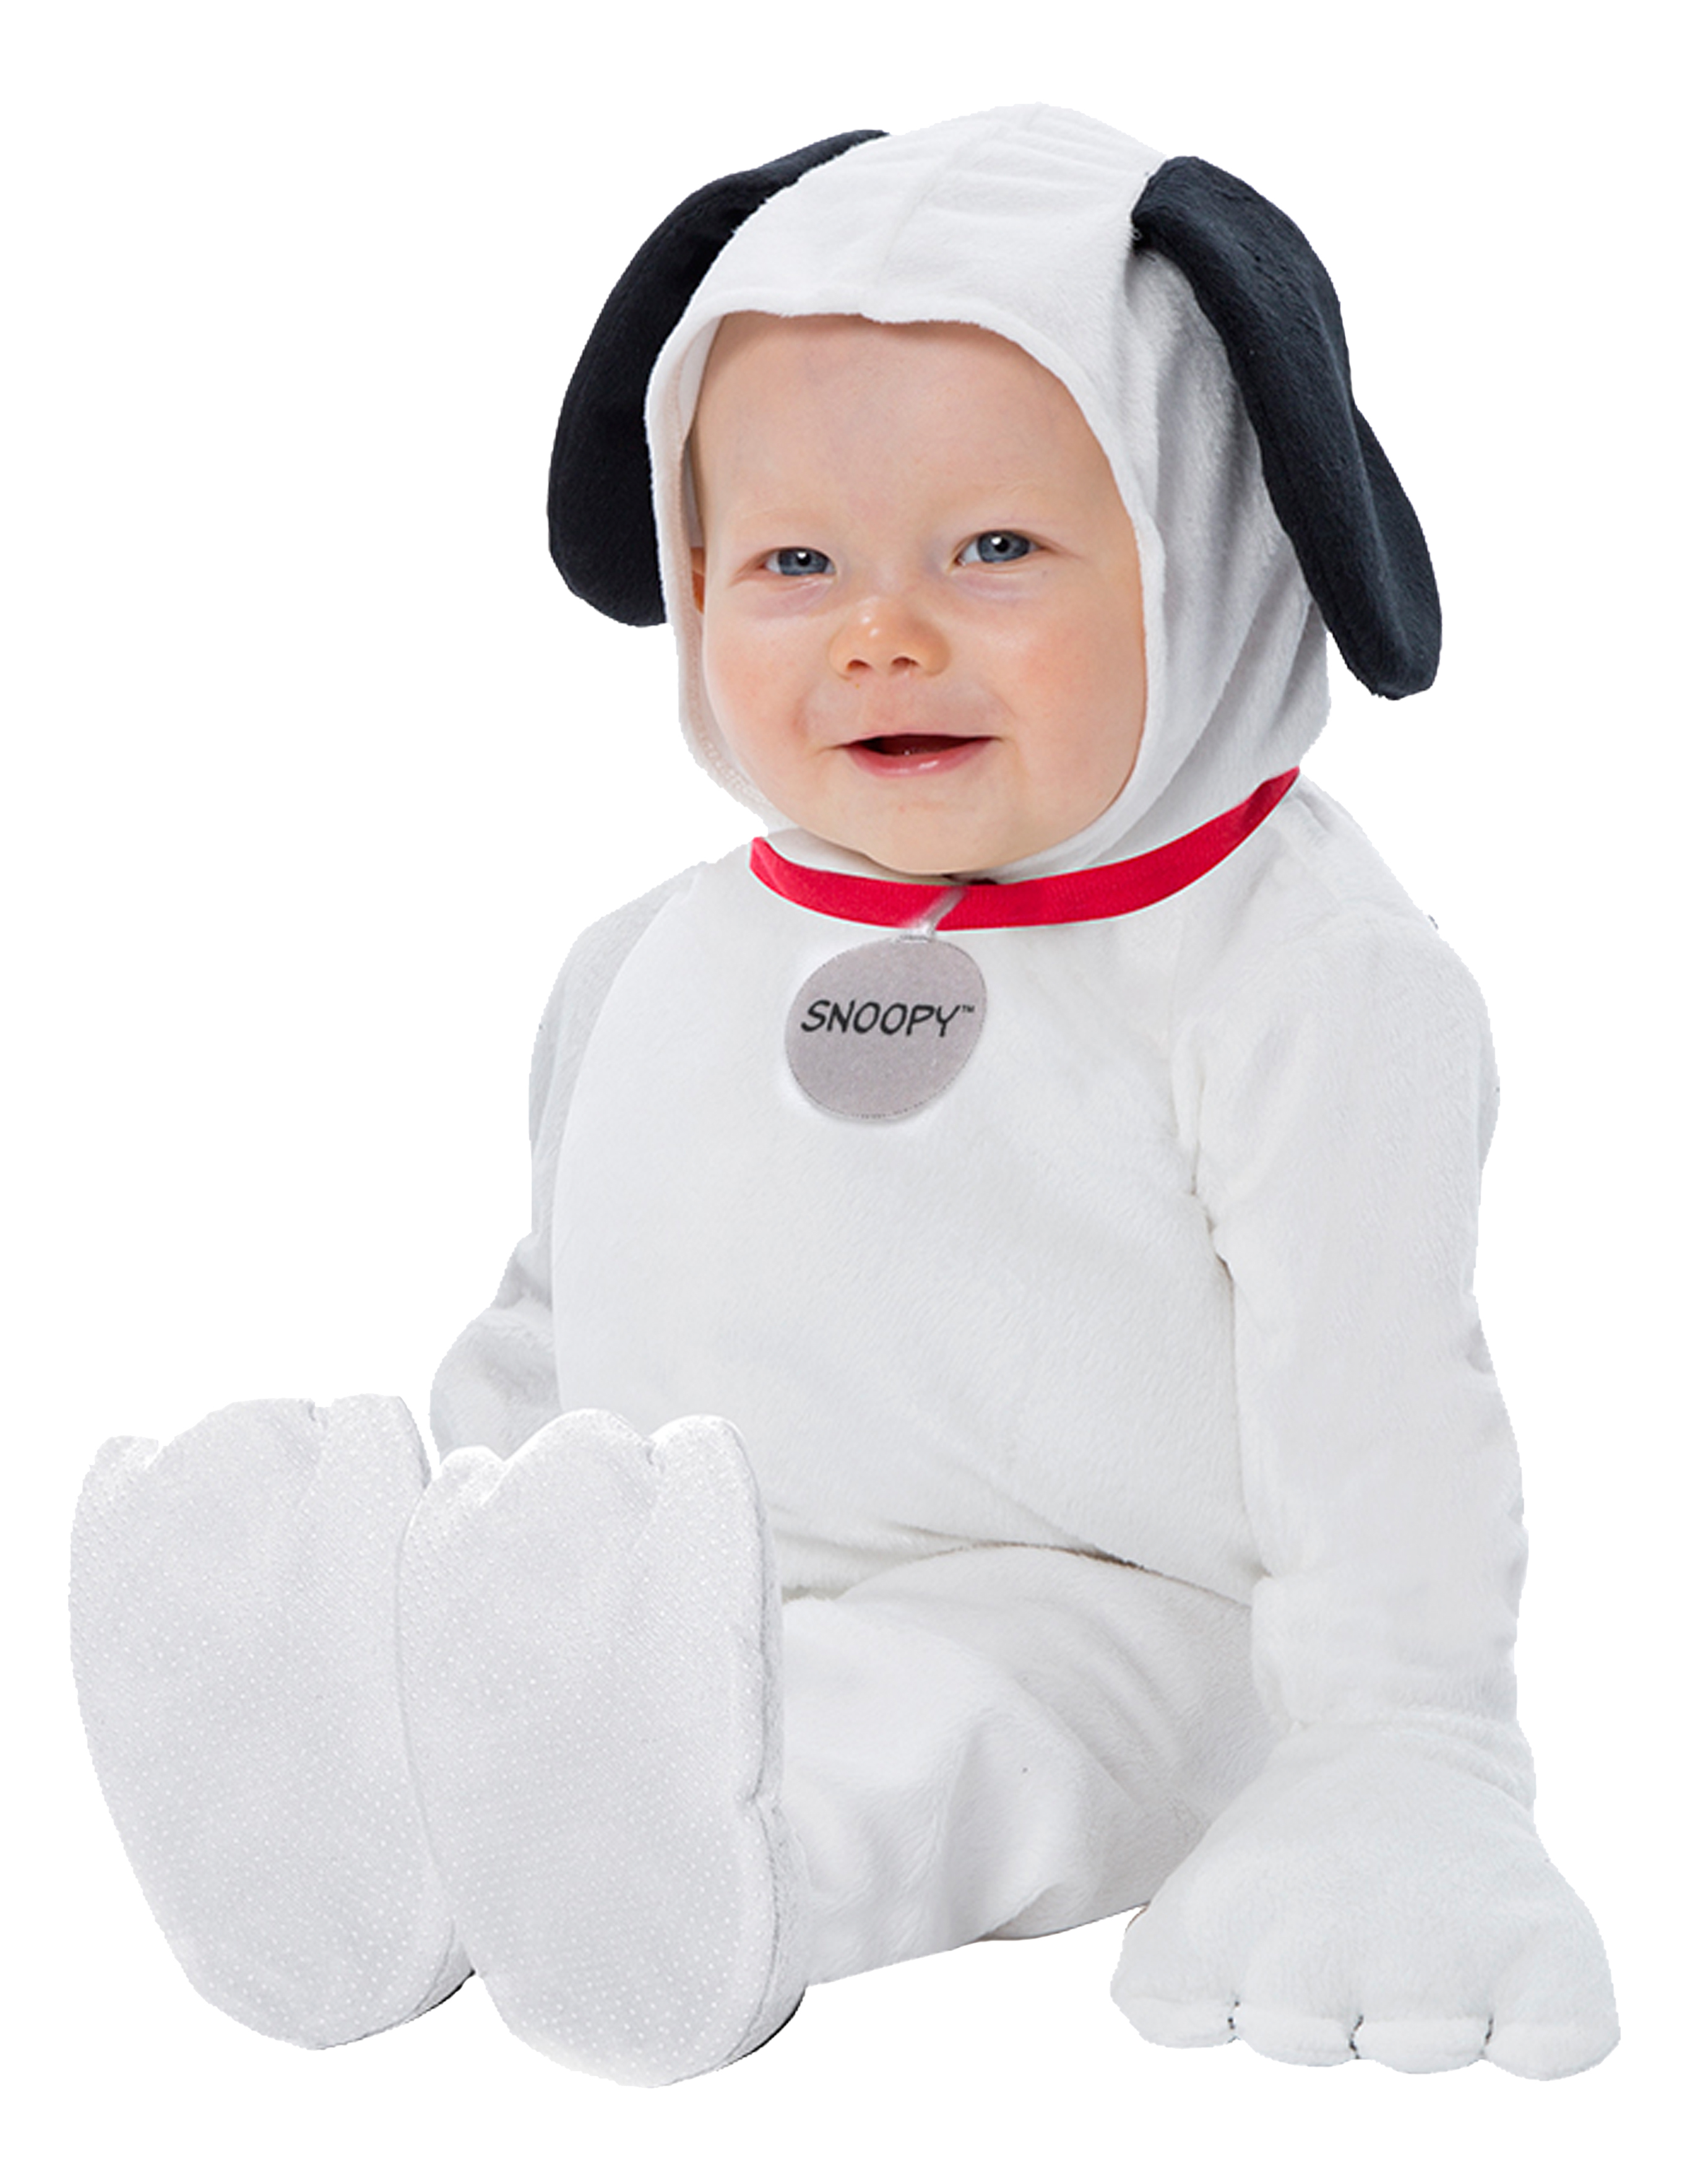 Baby Peanuts Snoopy NewBorn Costume, White, (0-9) Months